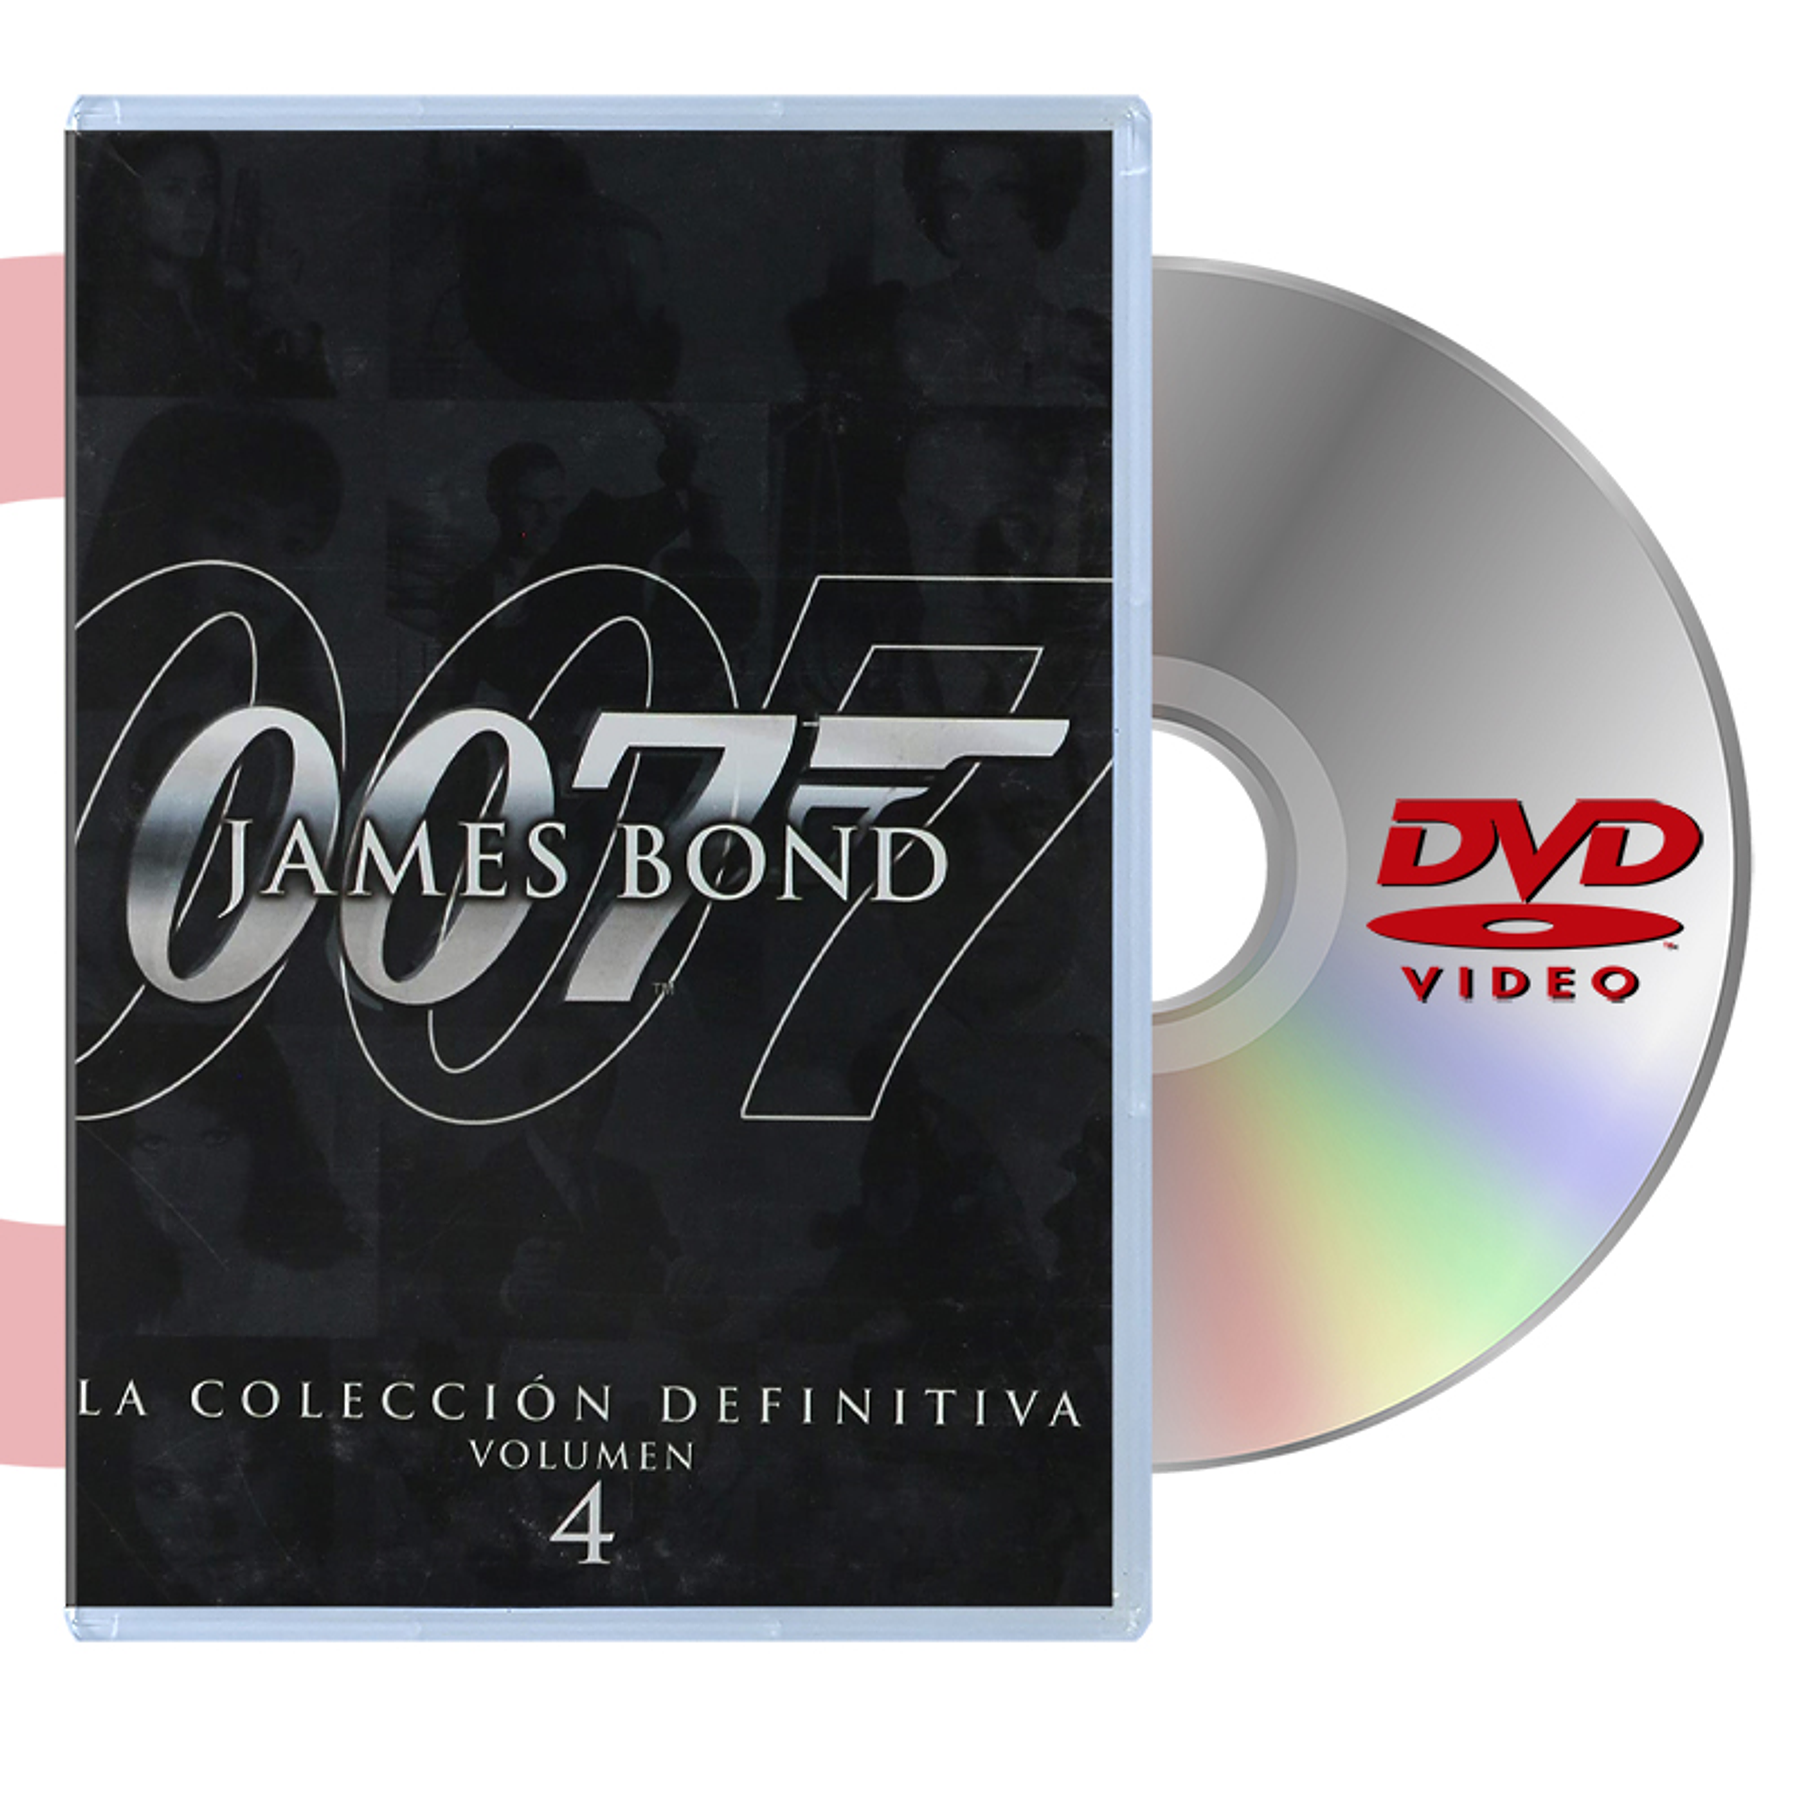 DVD JAMES BOND COLECCION DEFINITIVA VOL.4